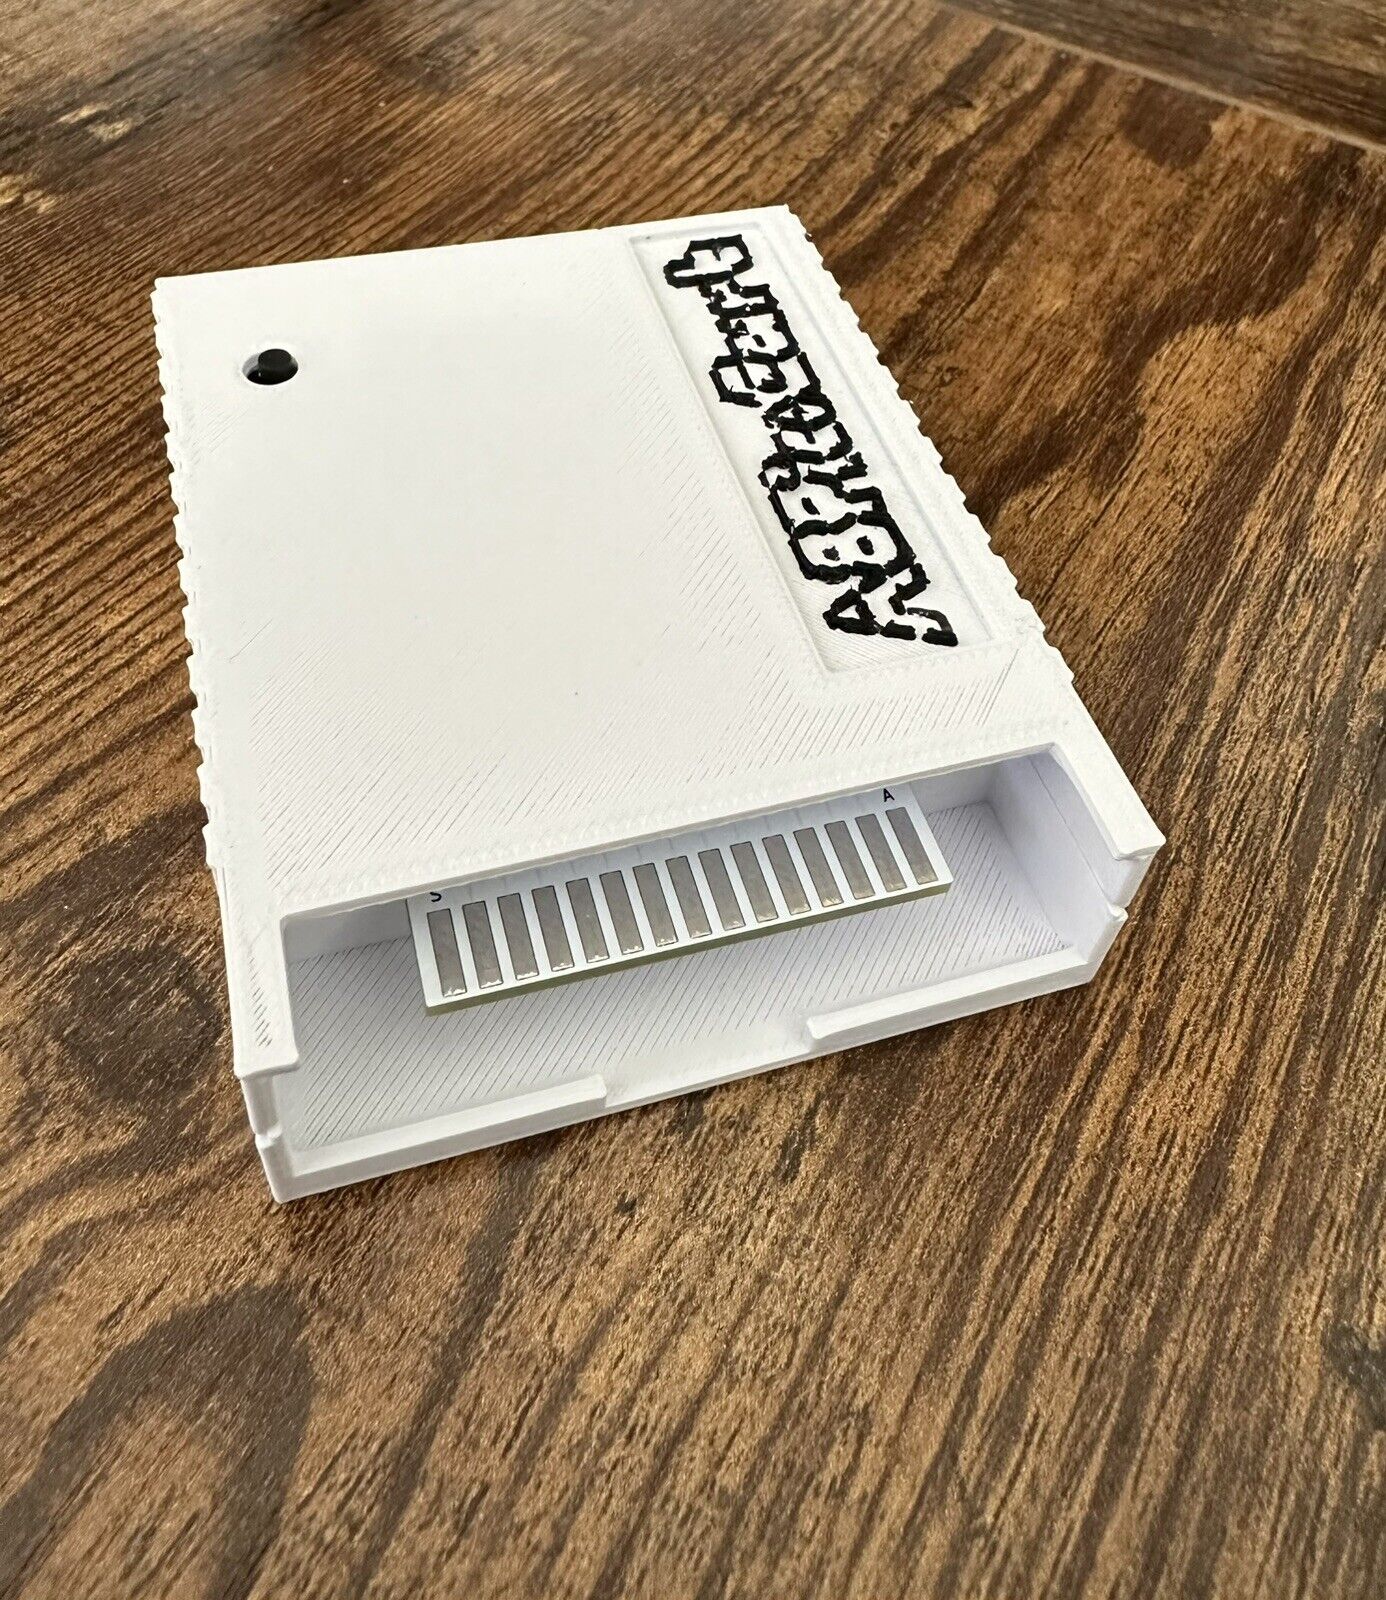 Atari 8bit A8PicoCart Multi-Cart For Atari Computer